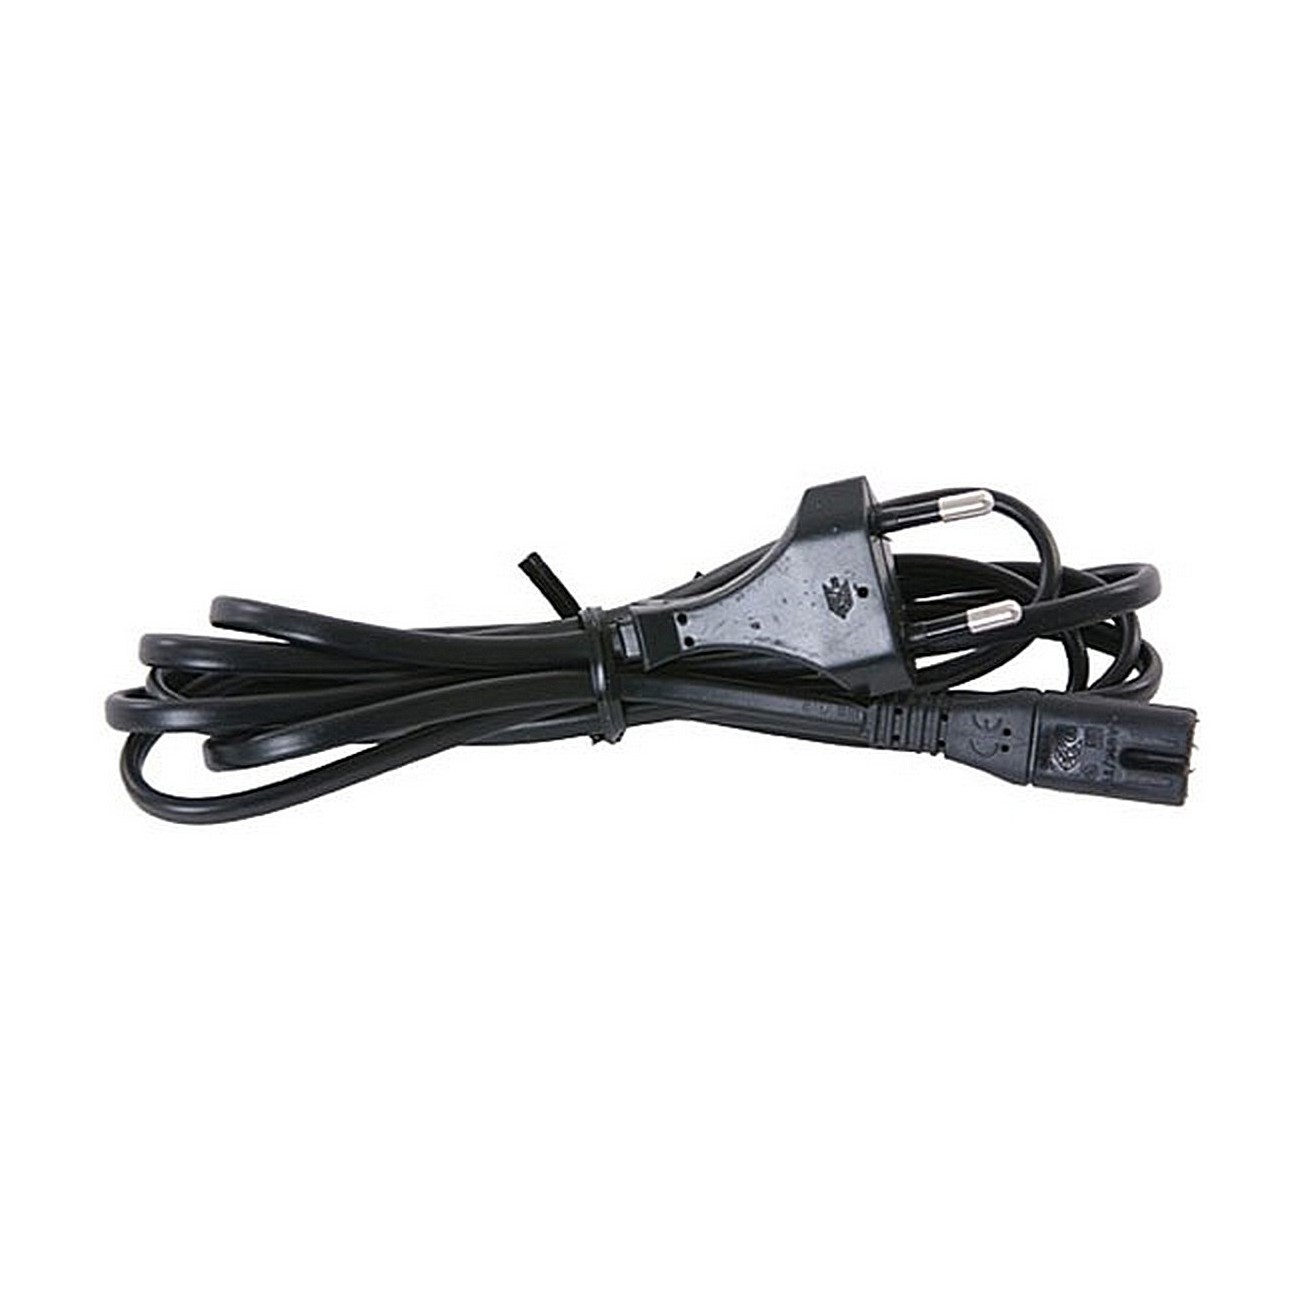 super record wireless charger power cable 12v eps v2 / v3 / v4 - cee socket - 1